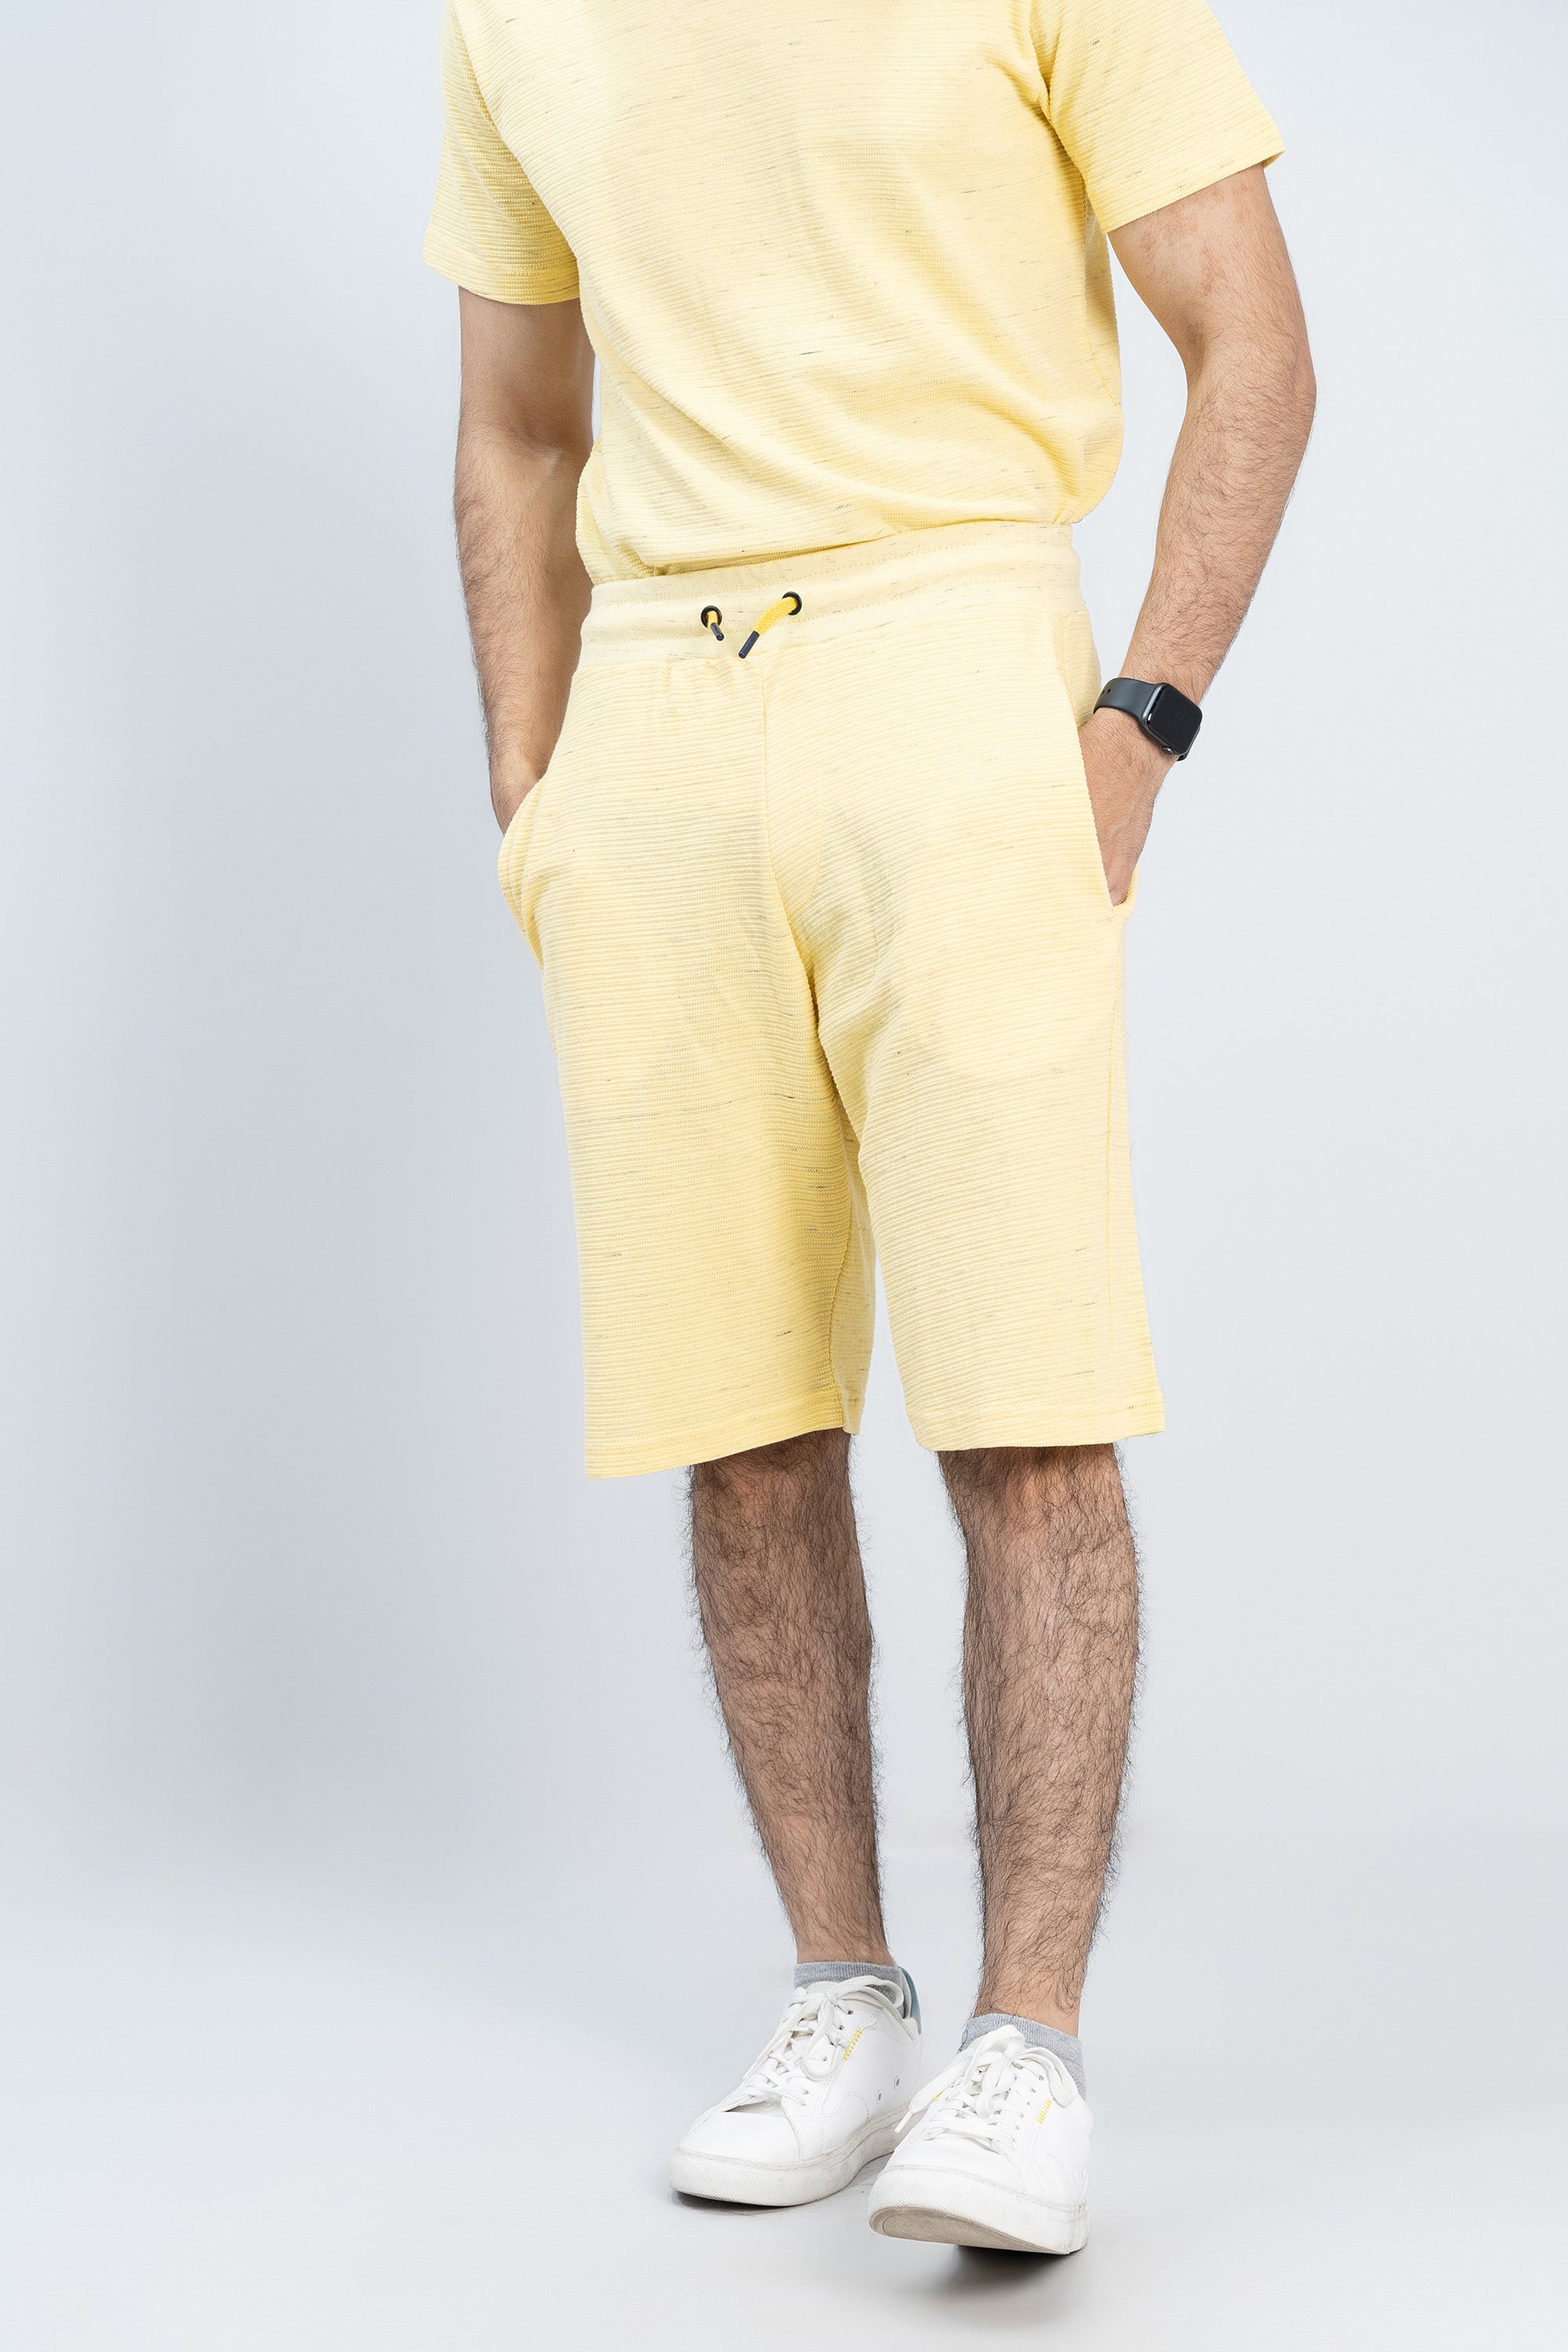 Yellow Gents Shorts